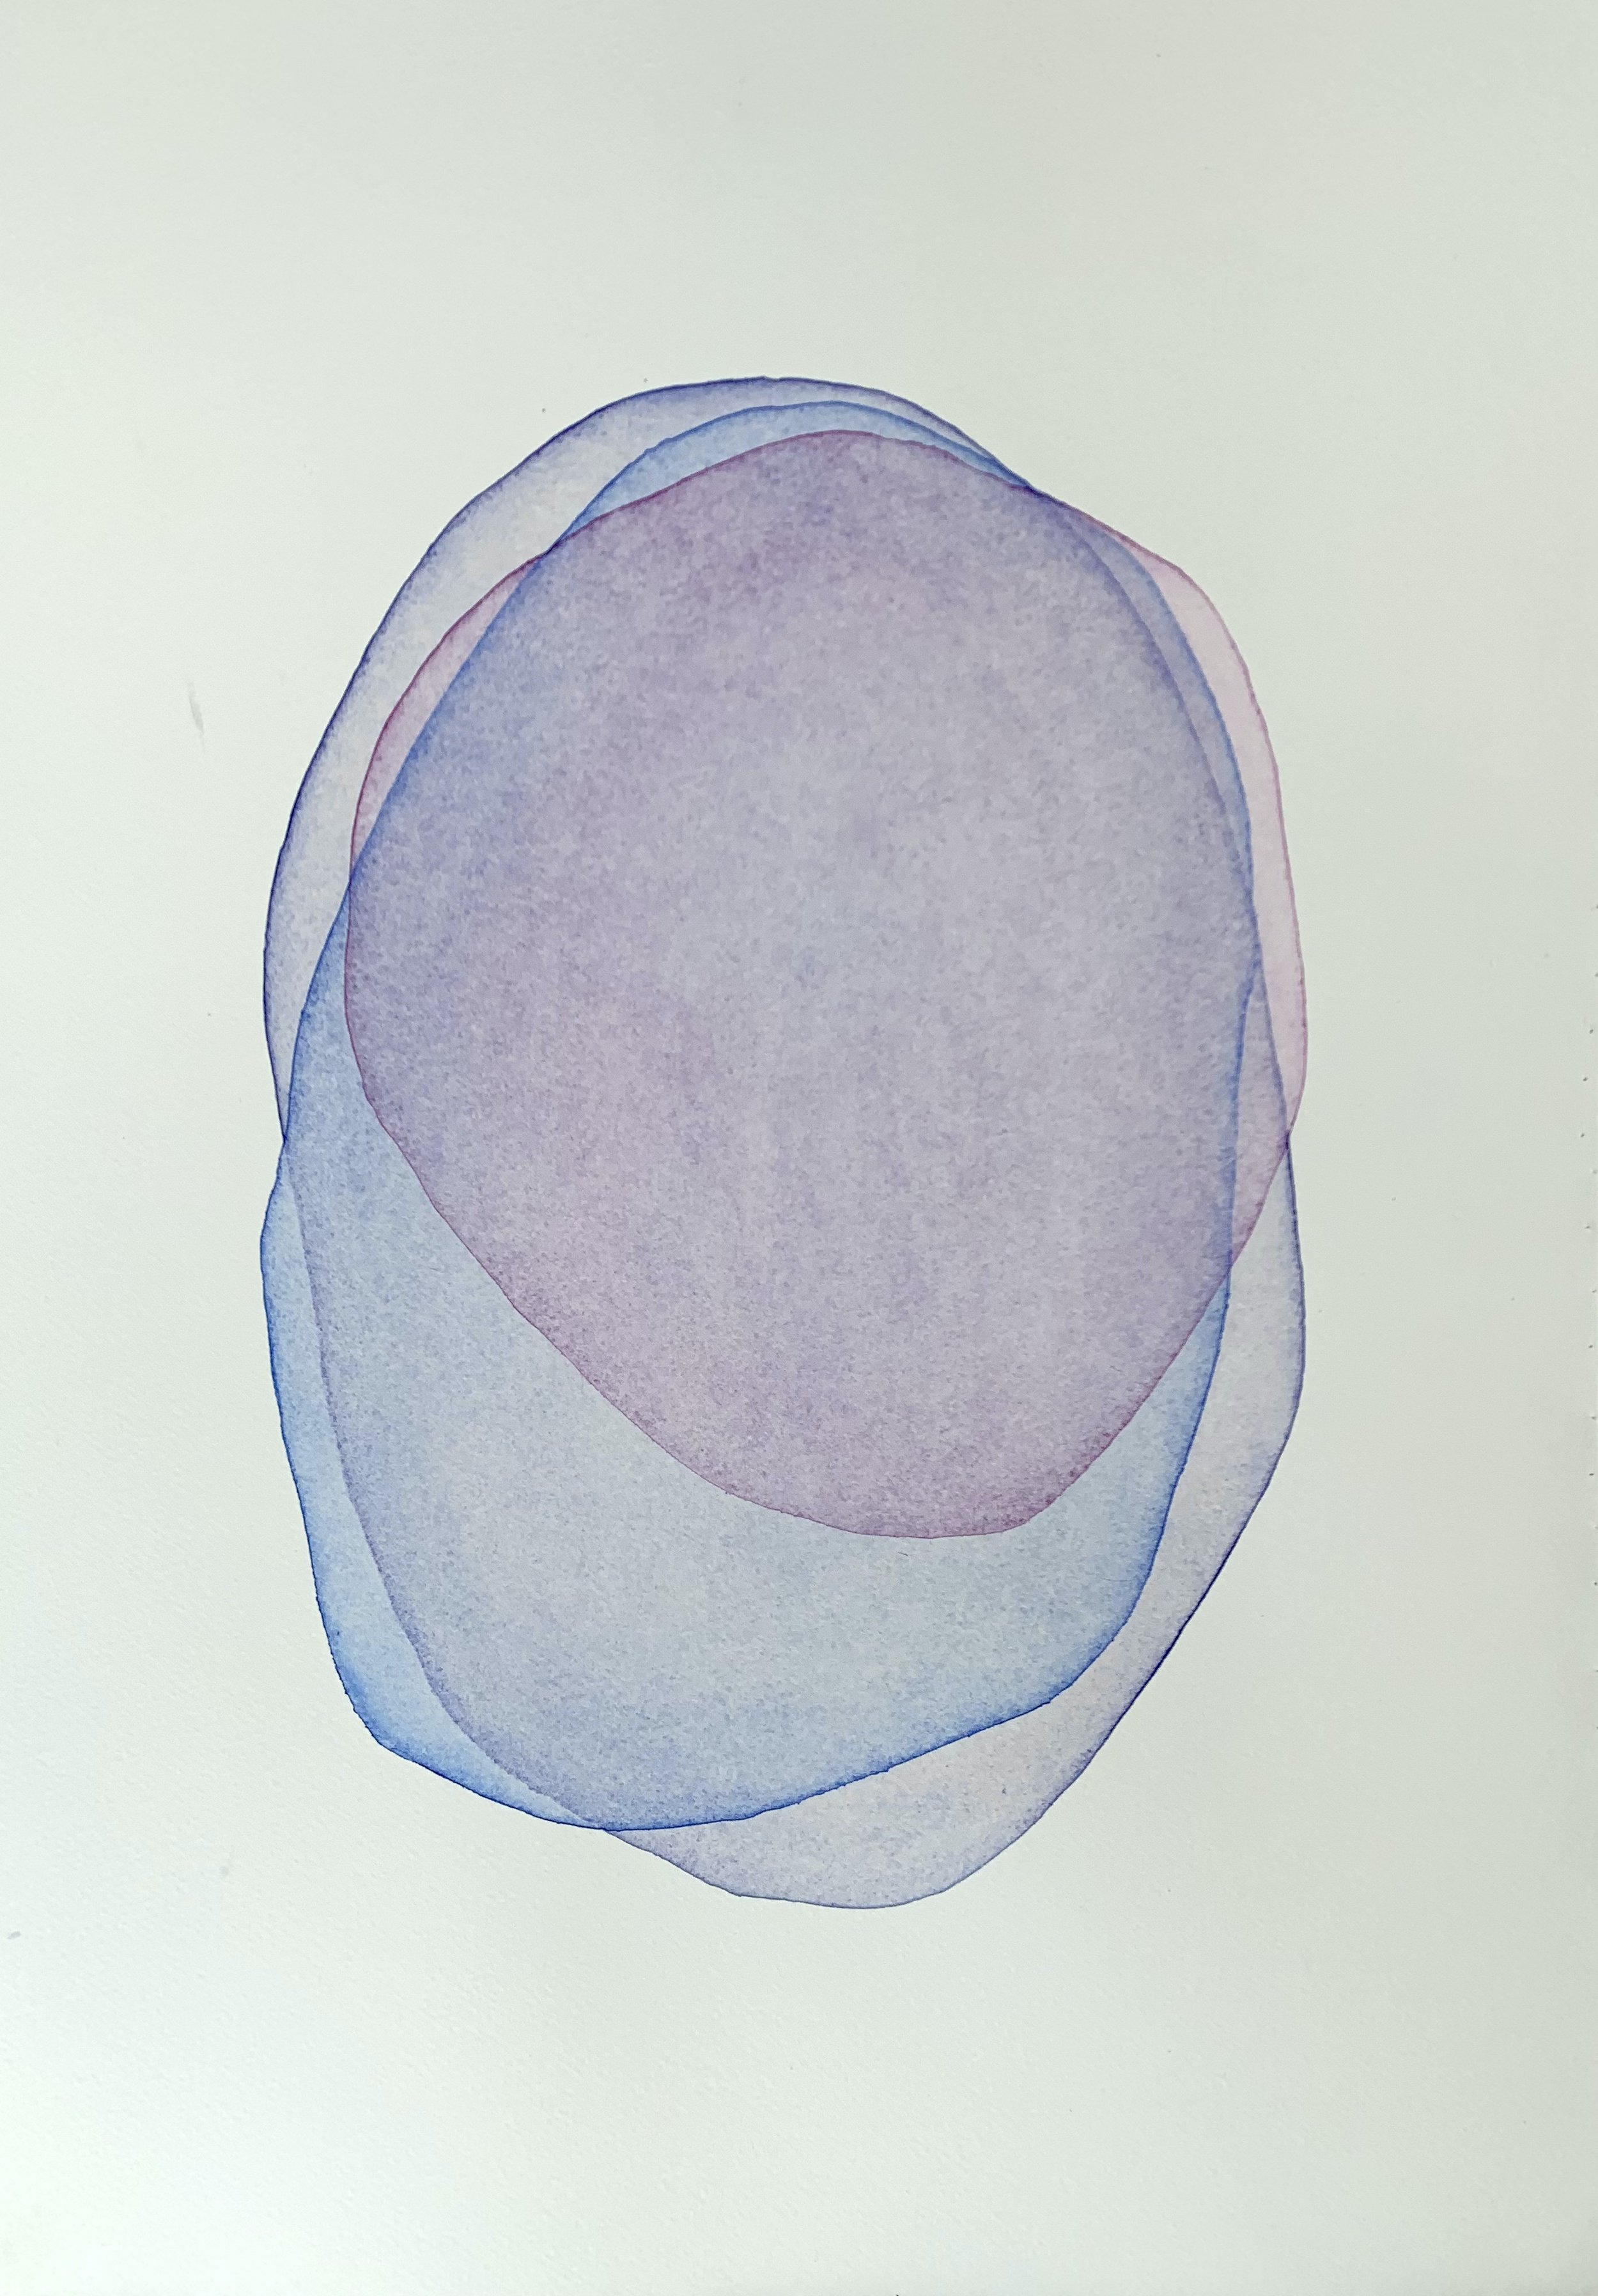  Bellies series, watercolour on paper, 35.5cm x 51cm, 2020 